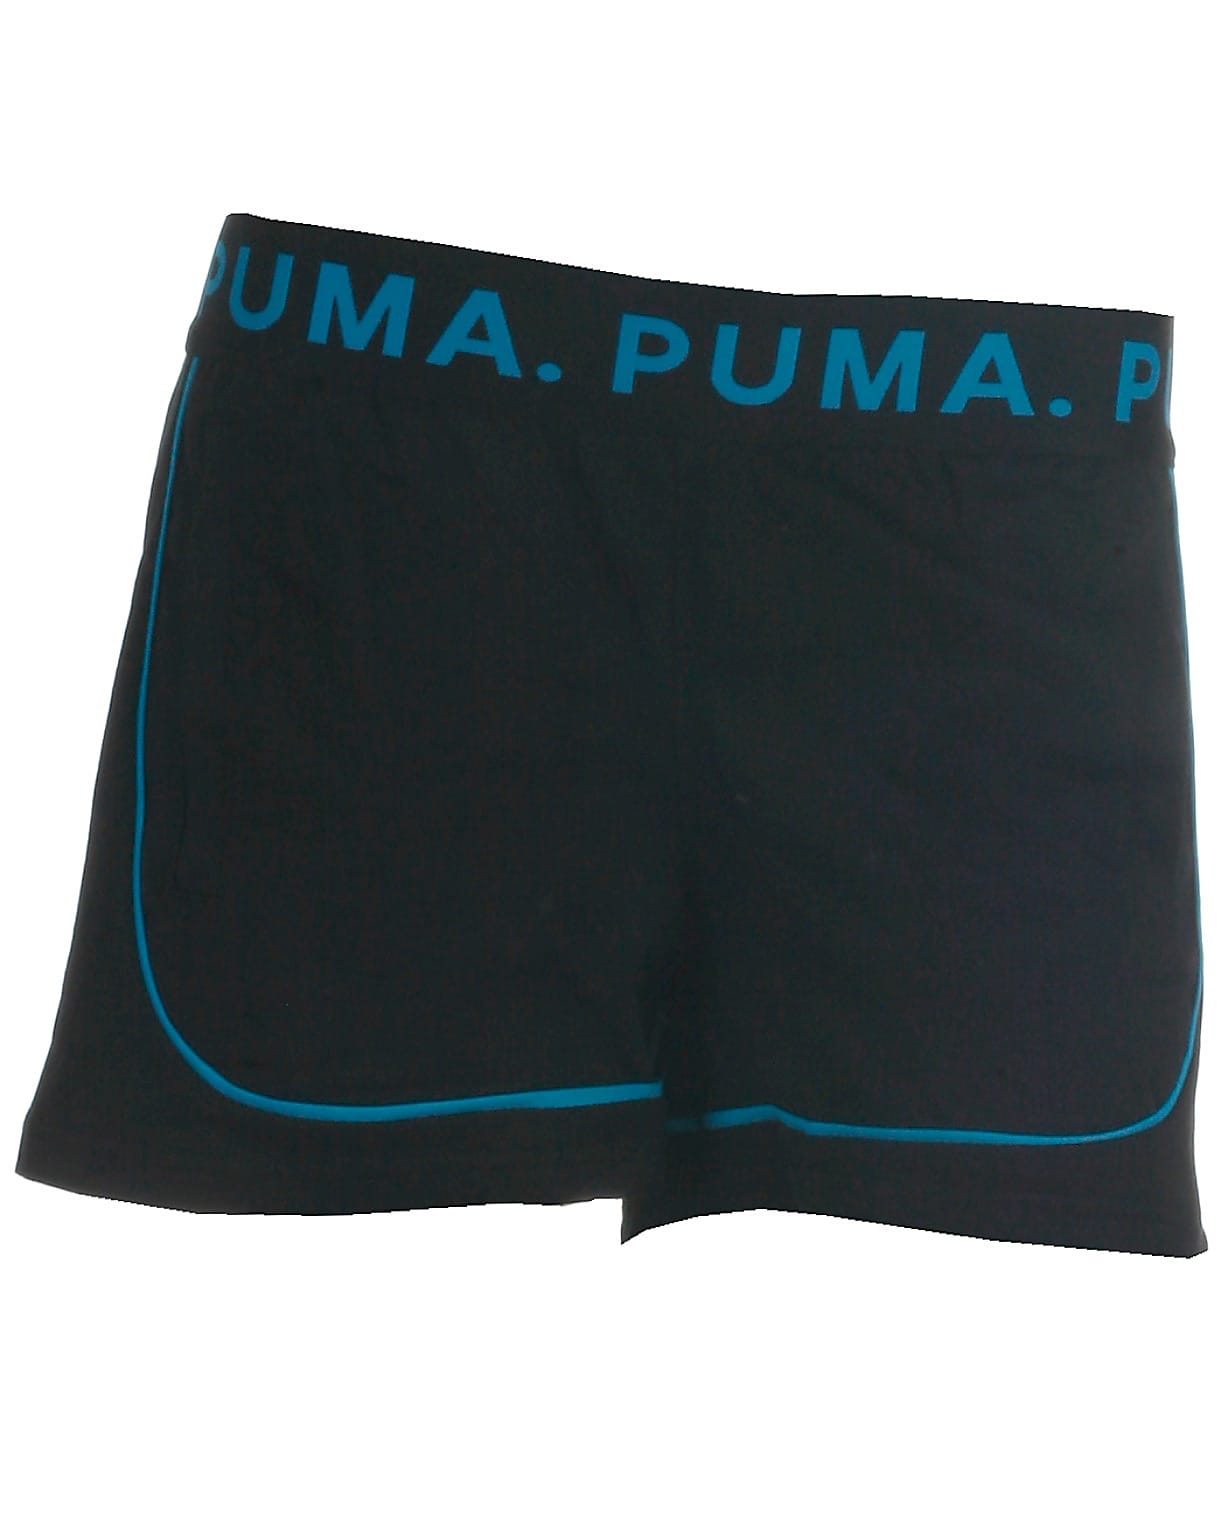 Puma sweat shorts